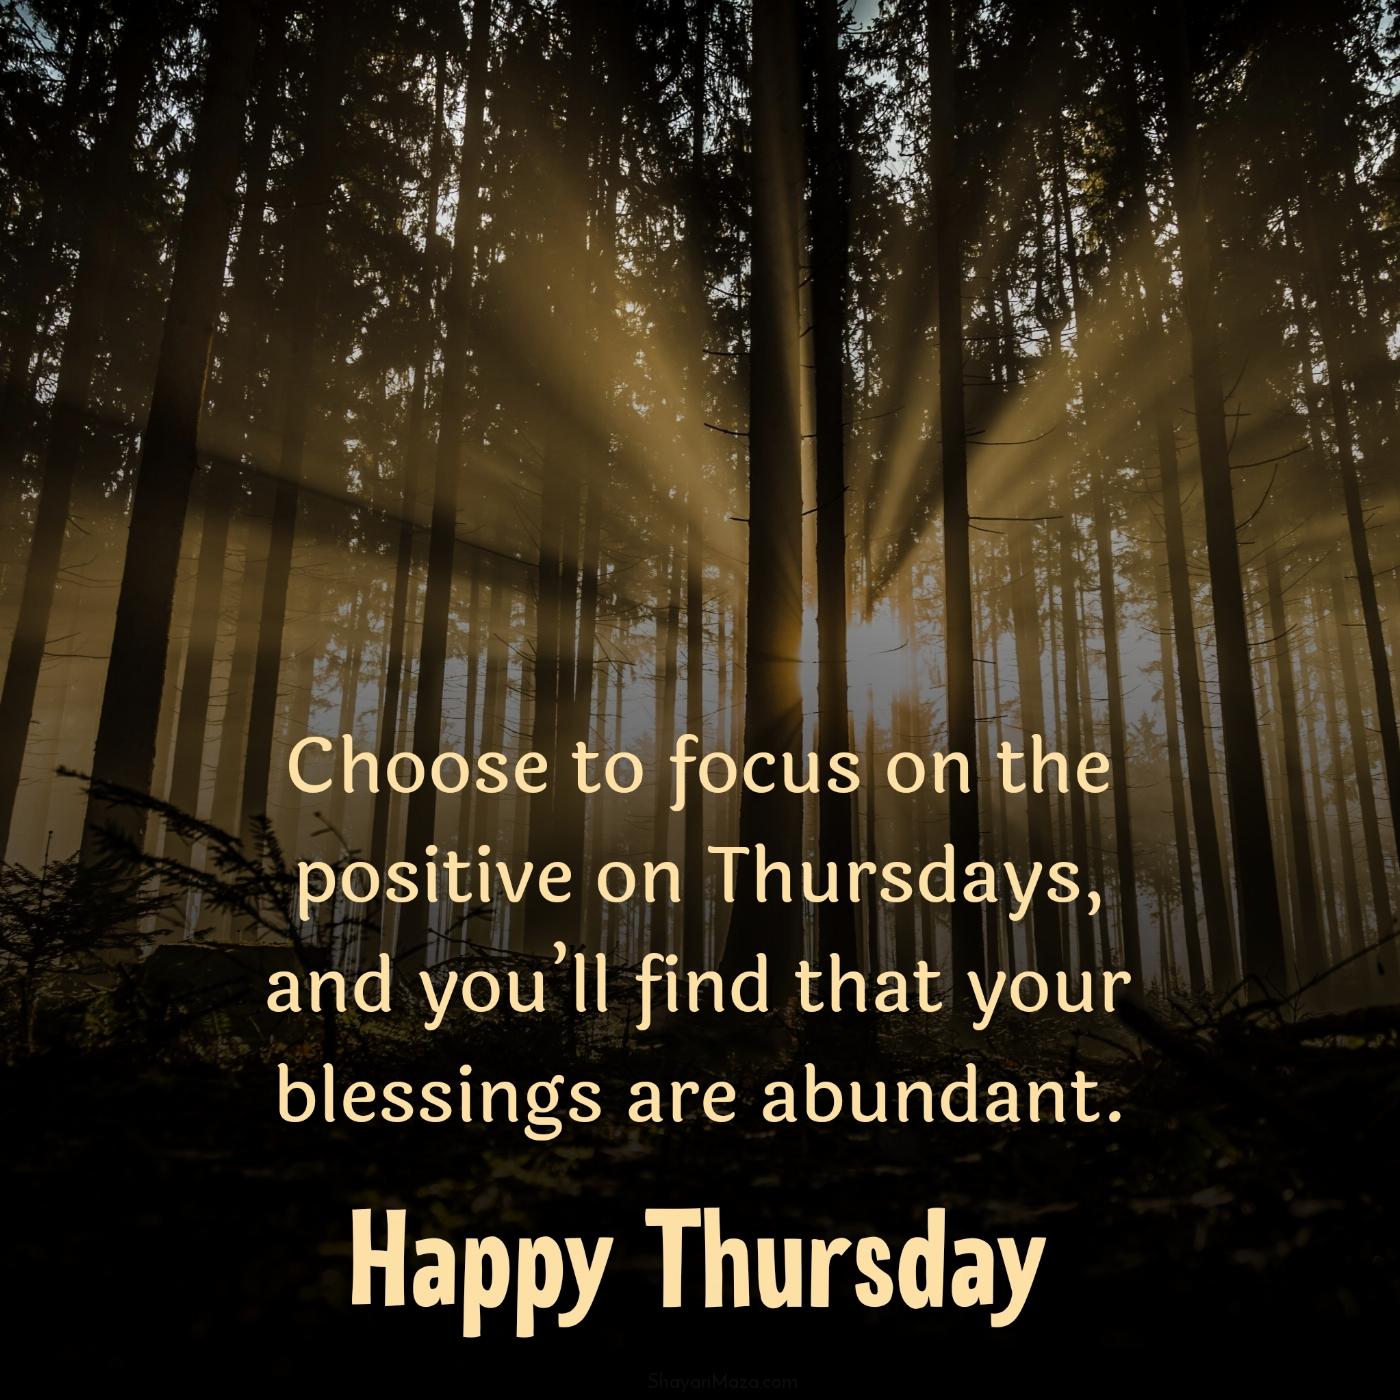 Choose to focus on the positive on Thursdays